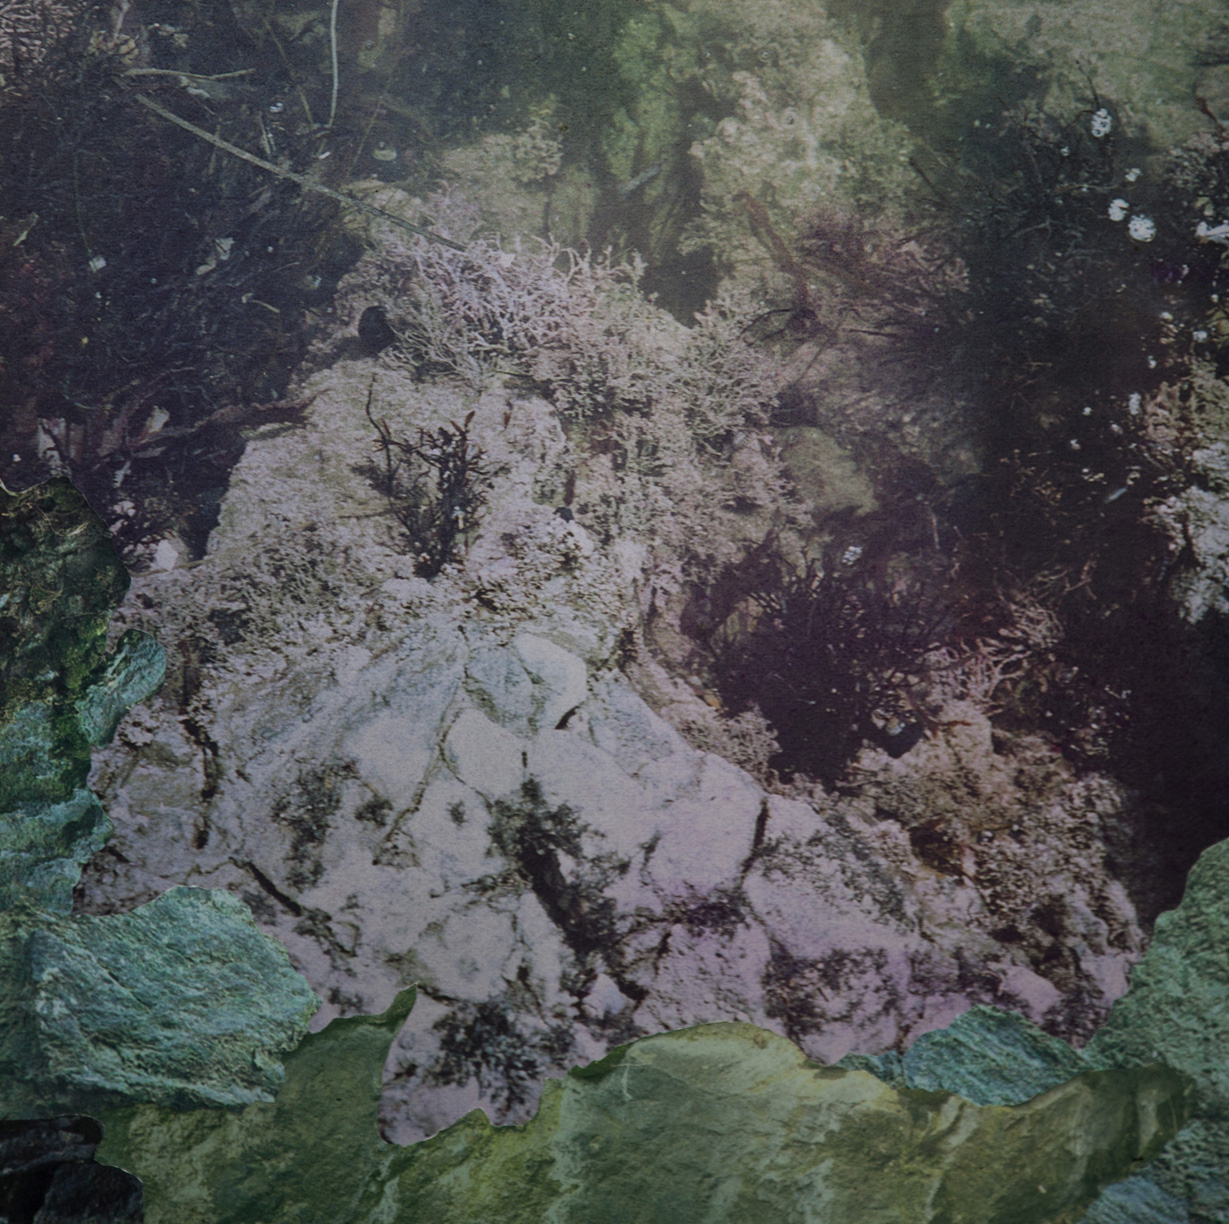   Tidal Pool I , detail,&nbsp;&nbsp; archival pigment prints, collage on panel, 54" x 43", 2012.  